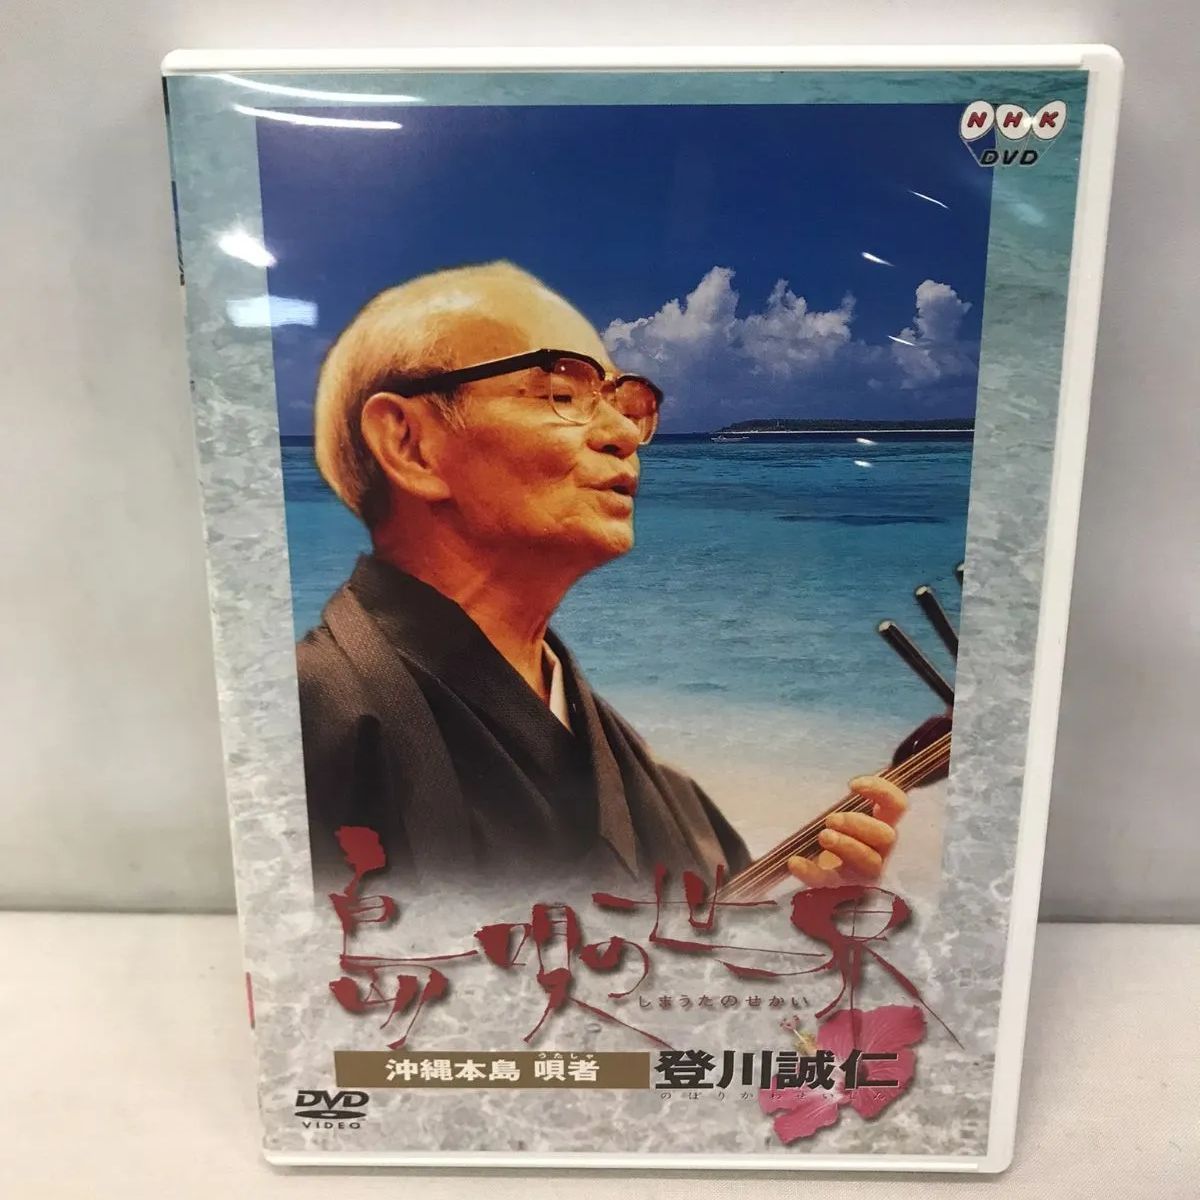 DVD NHK 島唄の世界 沖縄本島 唄者 登川誠仁